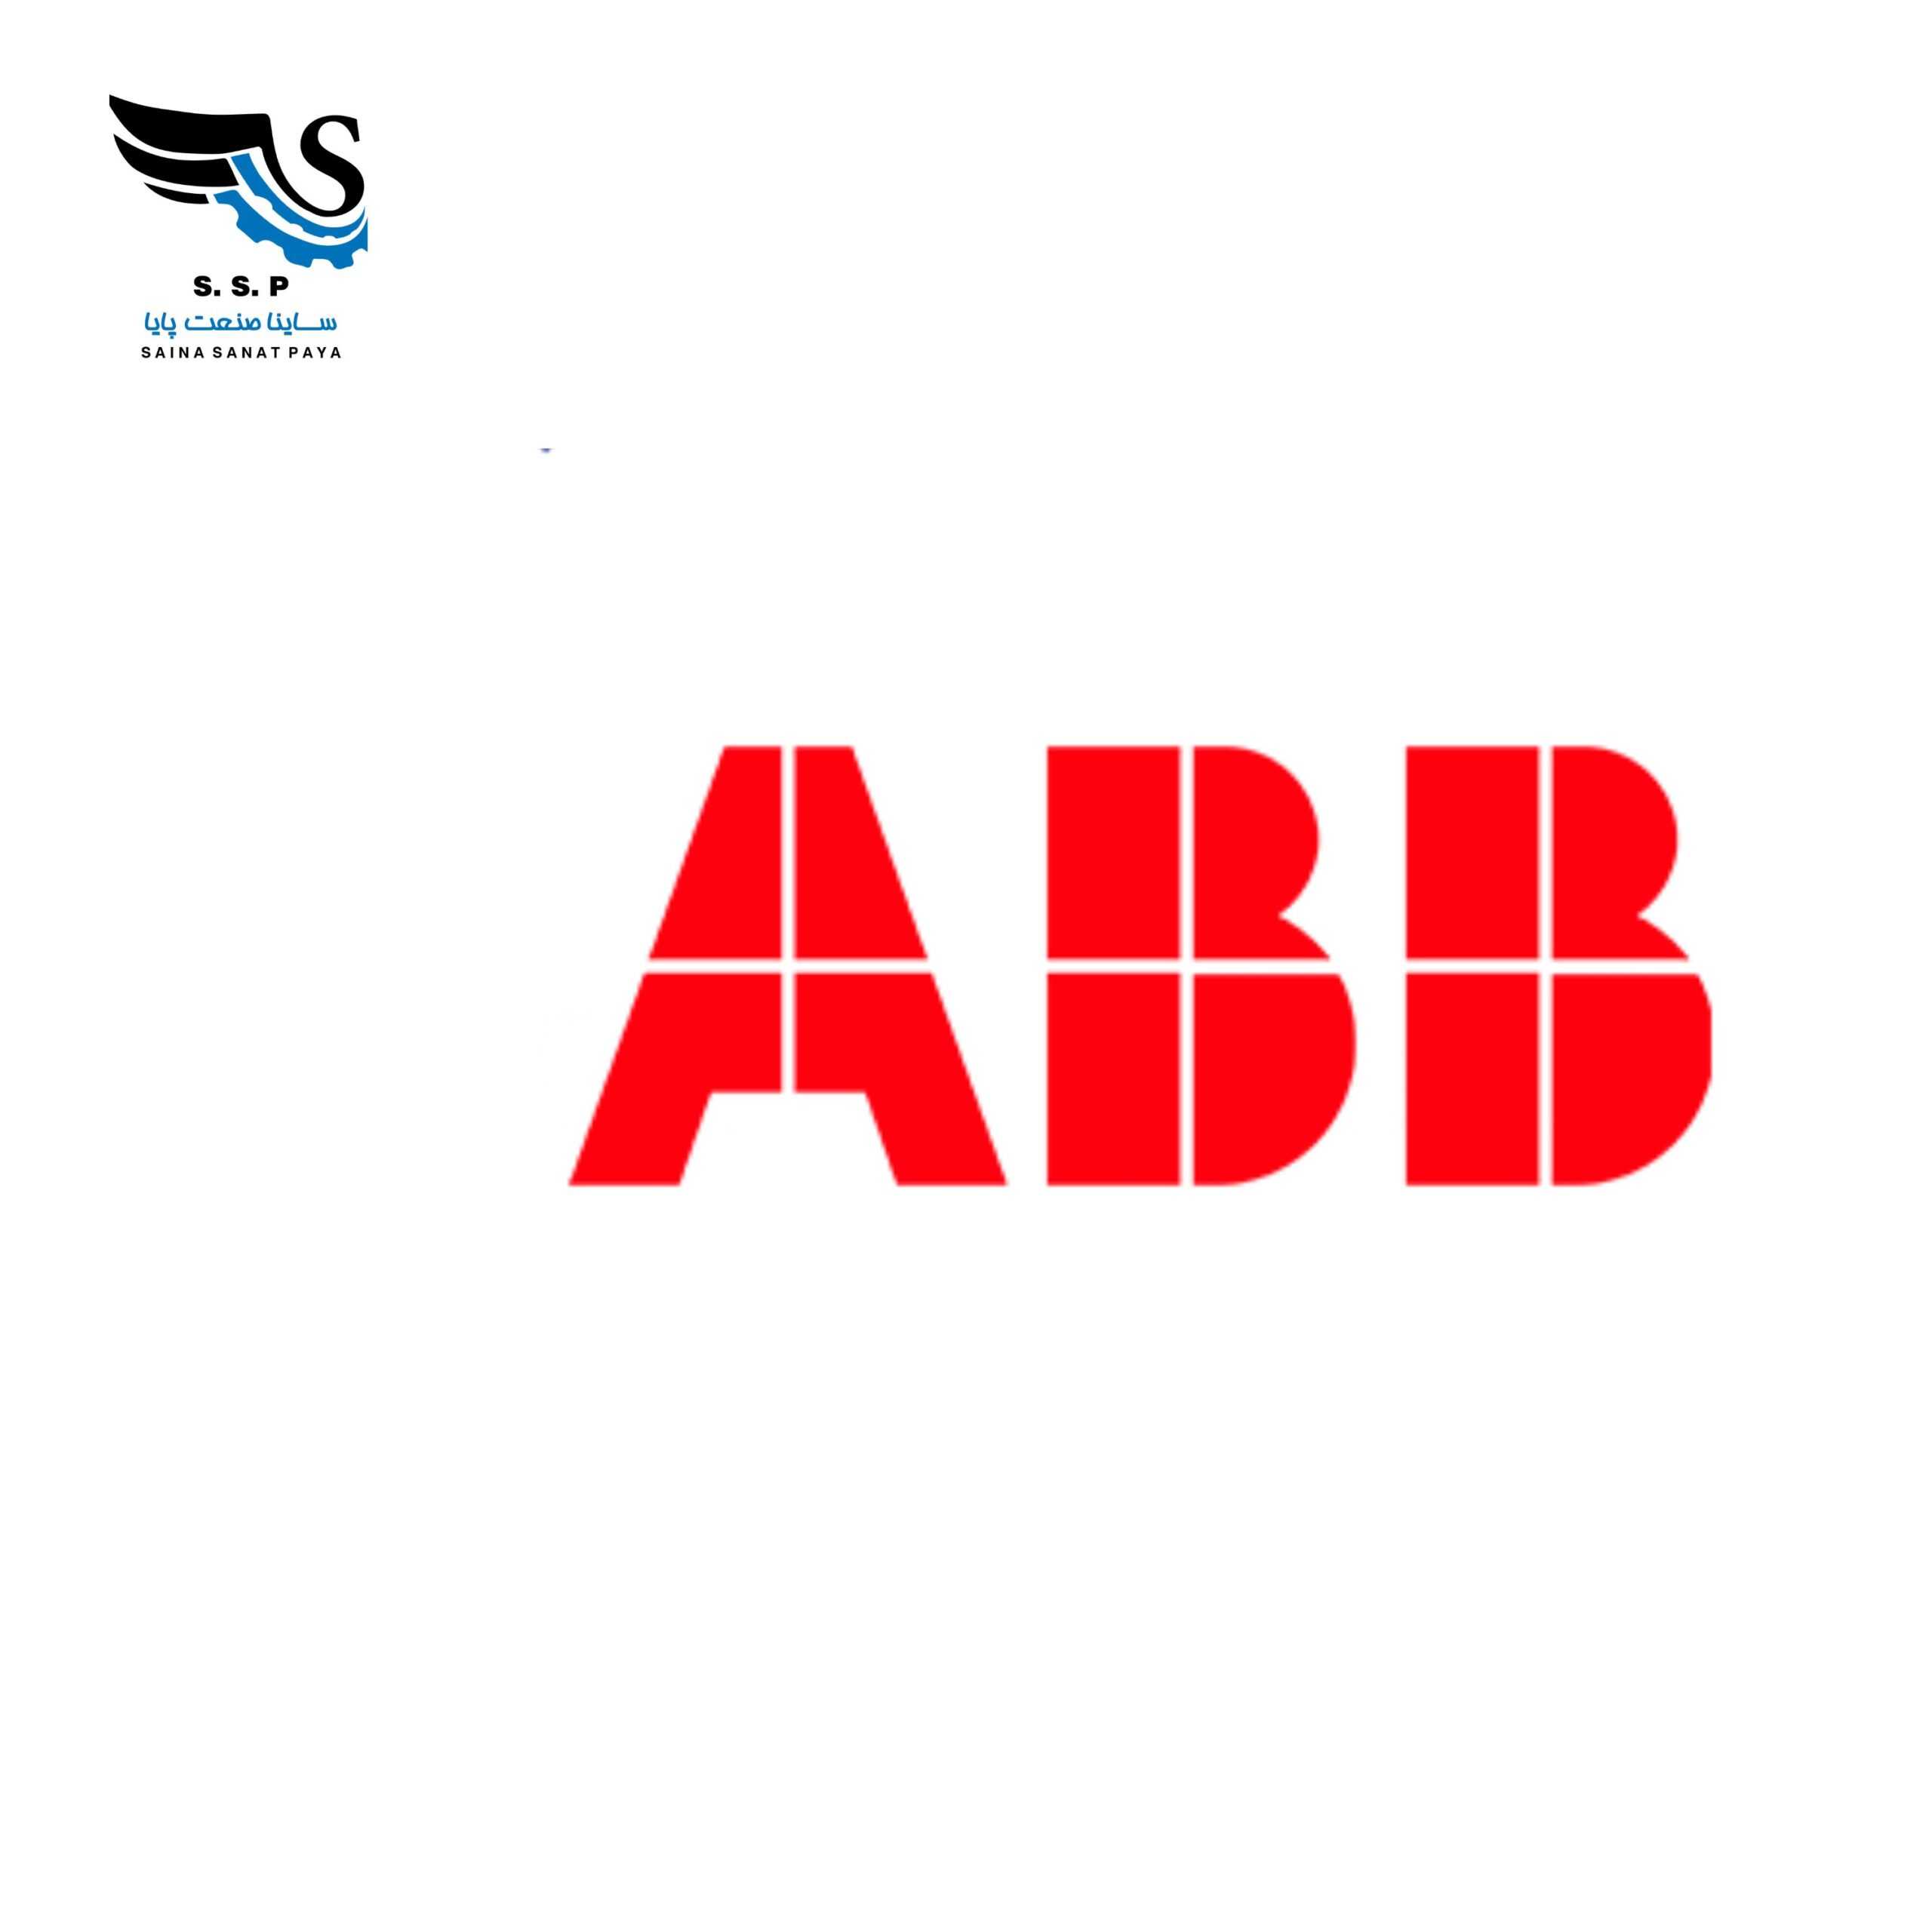 abb brand